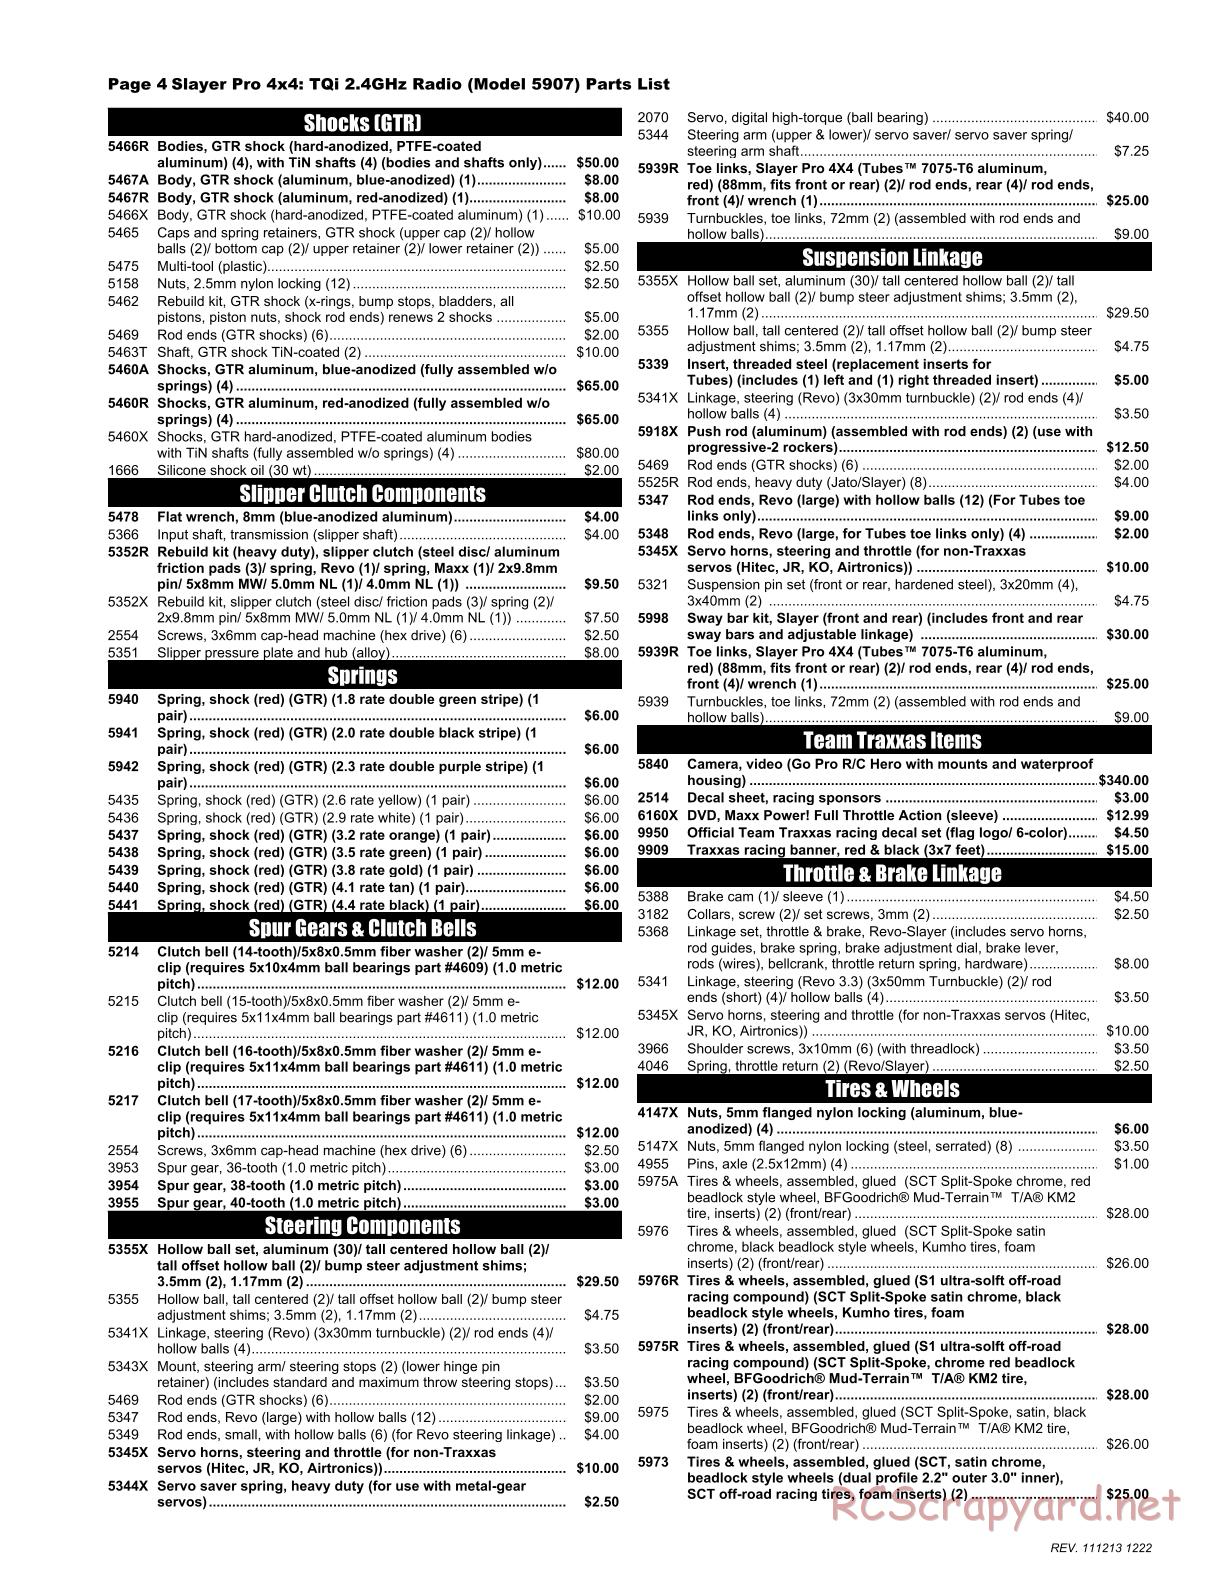 Traxxas - Slayer Pro 4x4 - Parts List - Page 4